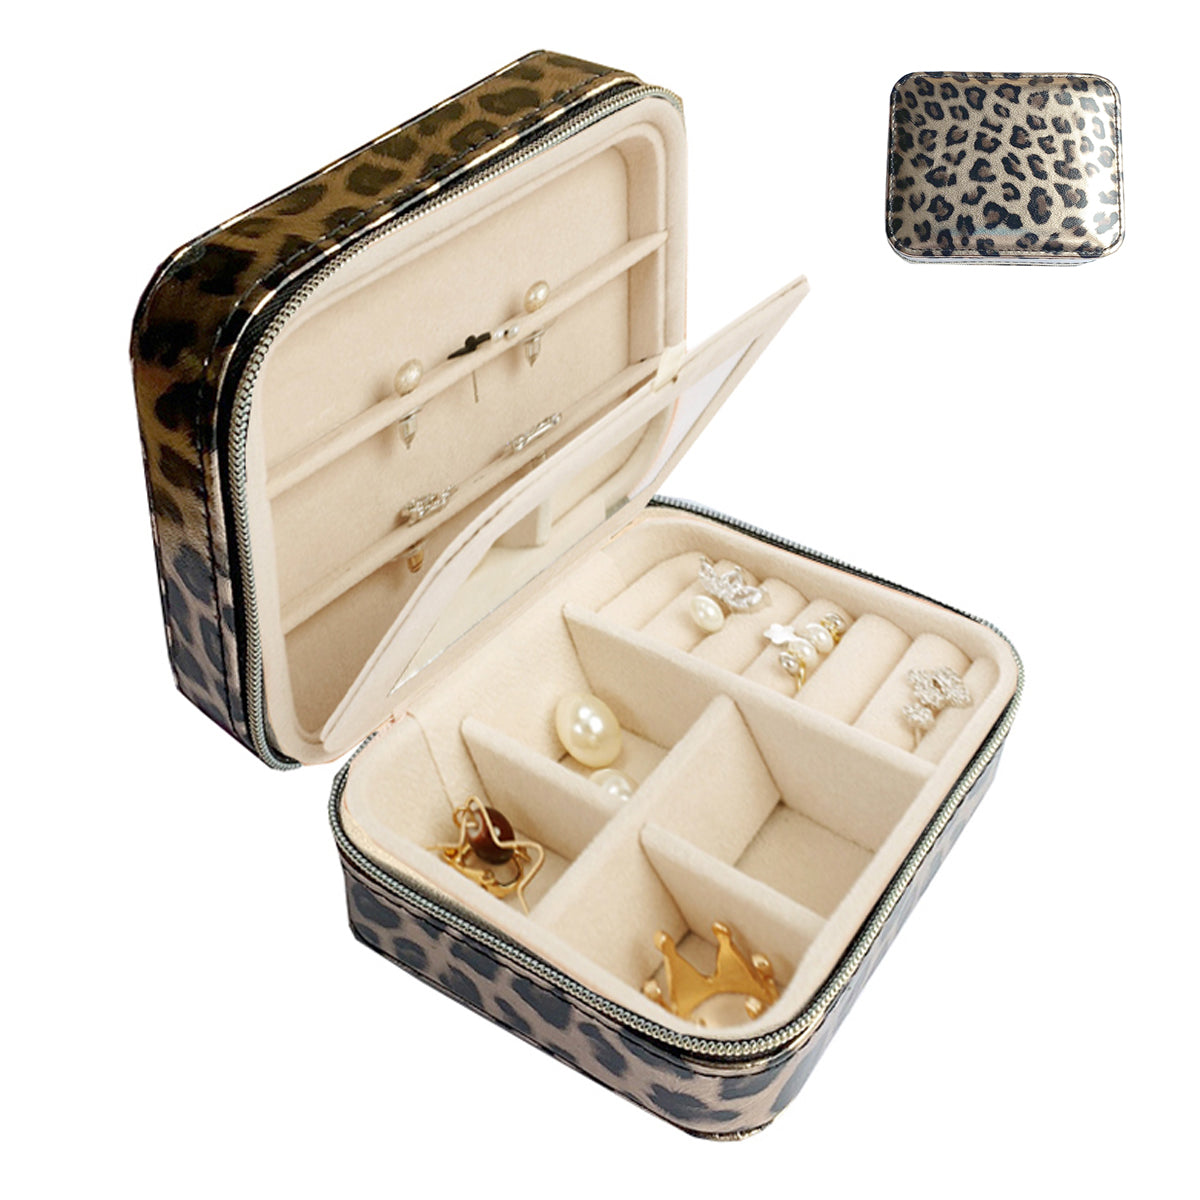 Cool Jewels A Palm Sized Compact Jewelry Box Vista Shops